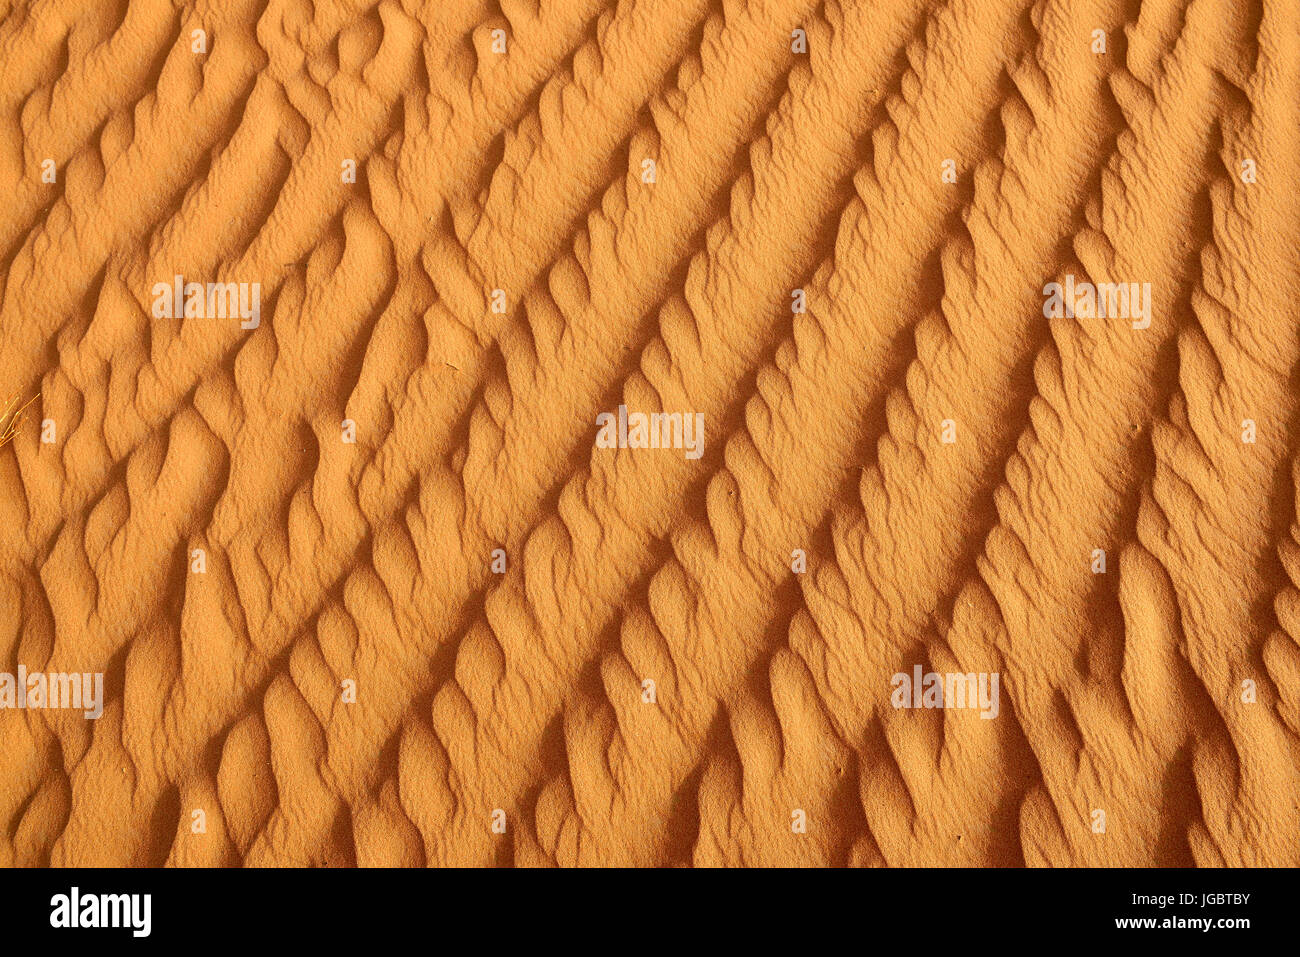 Sand ripples in the sand, dunes, Rub al Khali desert, Dhofar, Oman Stock Photo